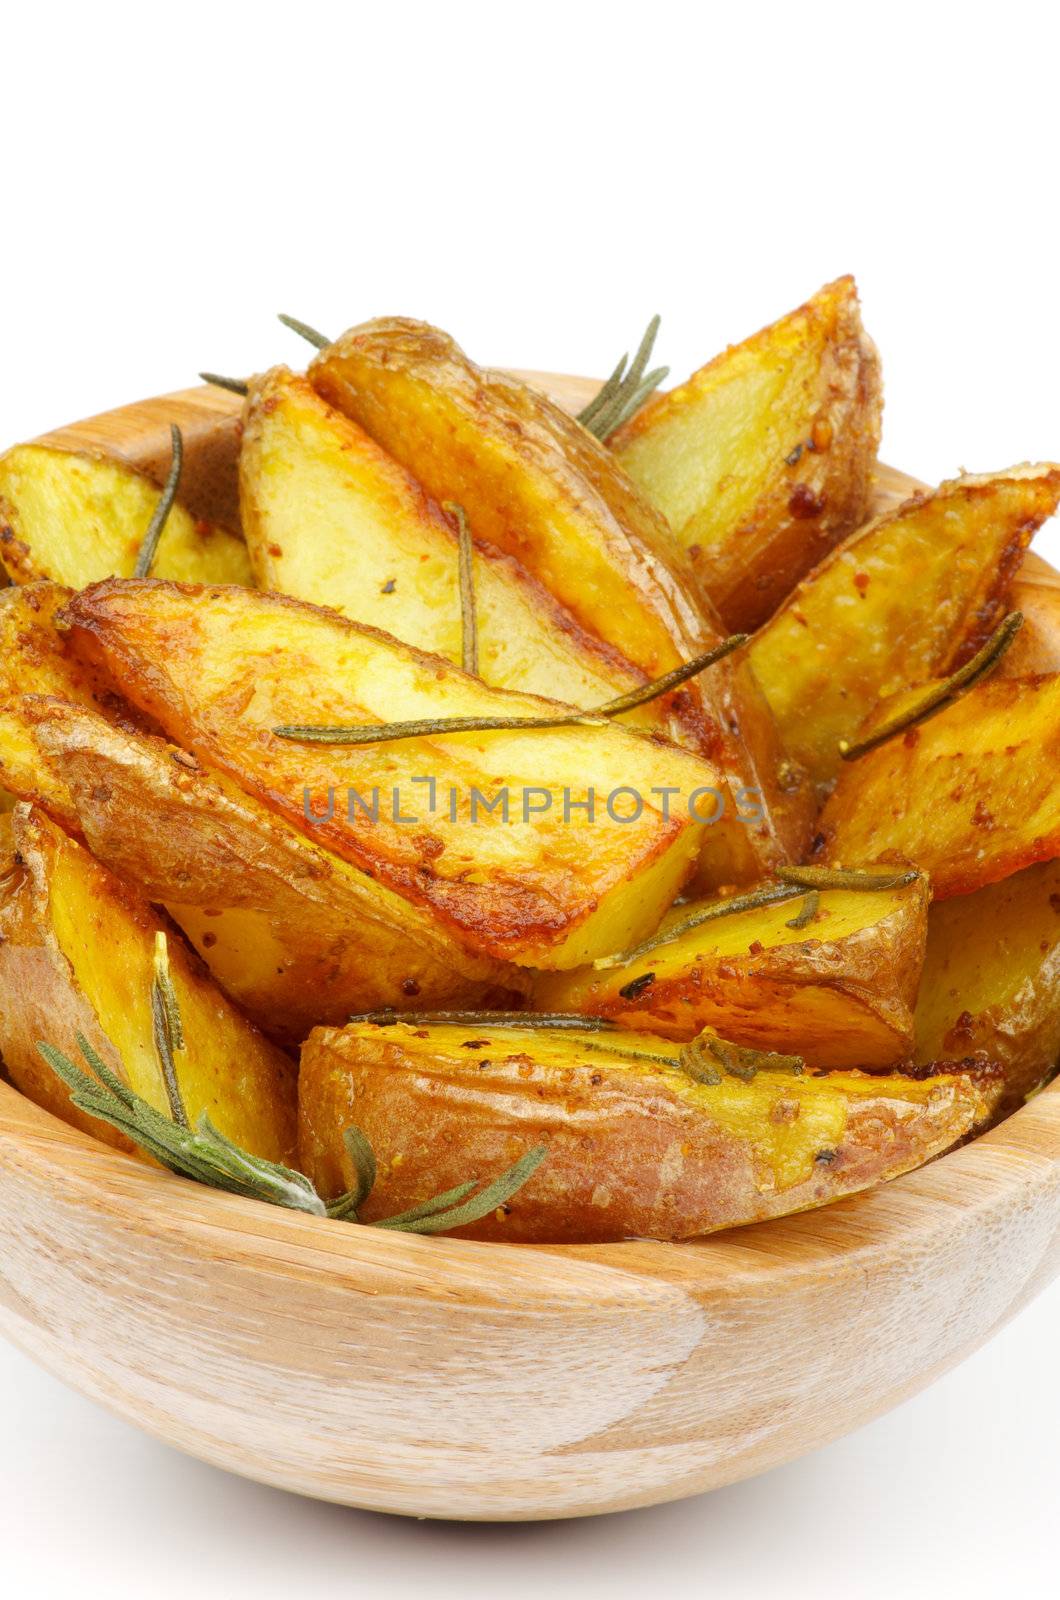 Potato Wedges by zhekos